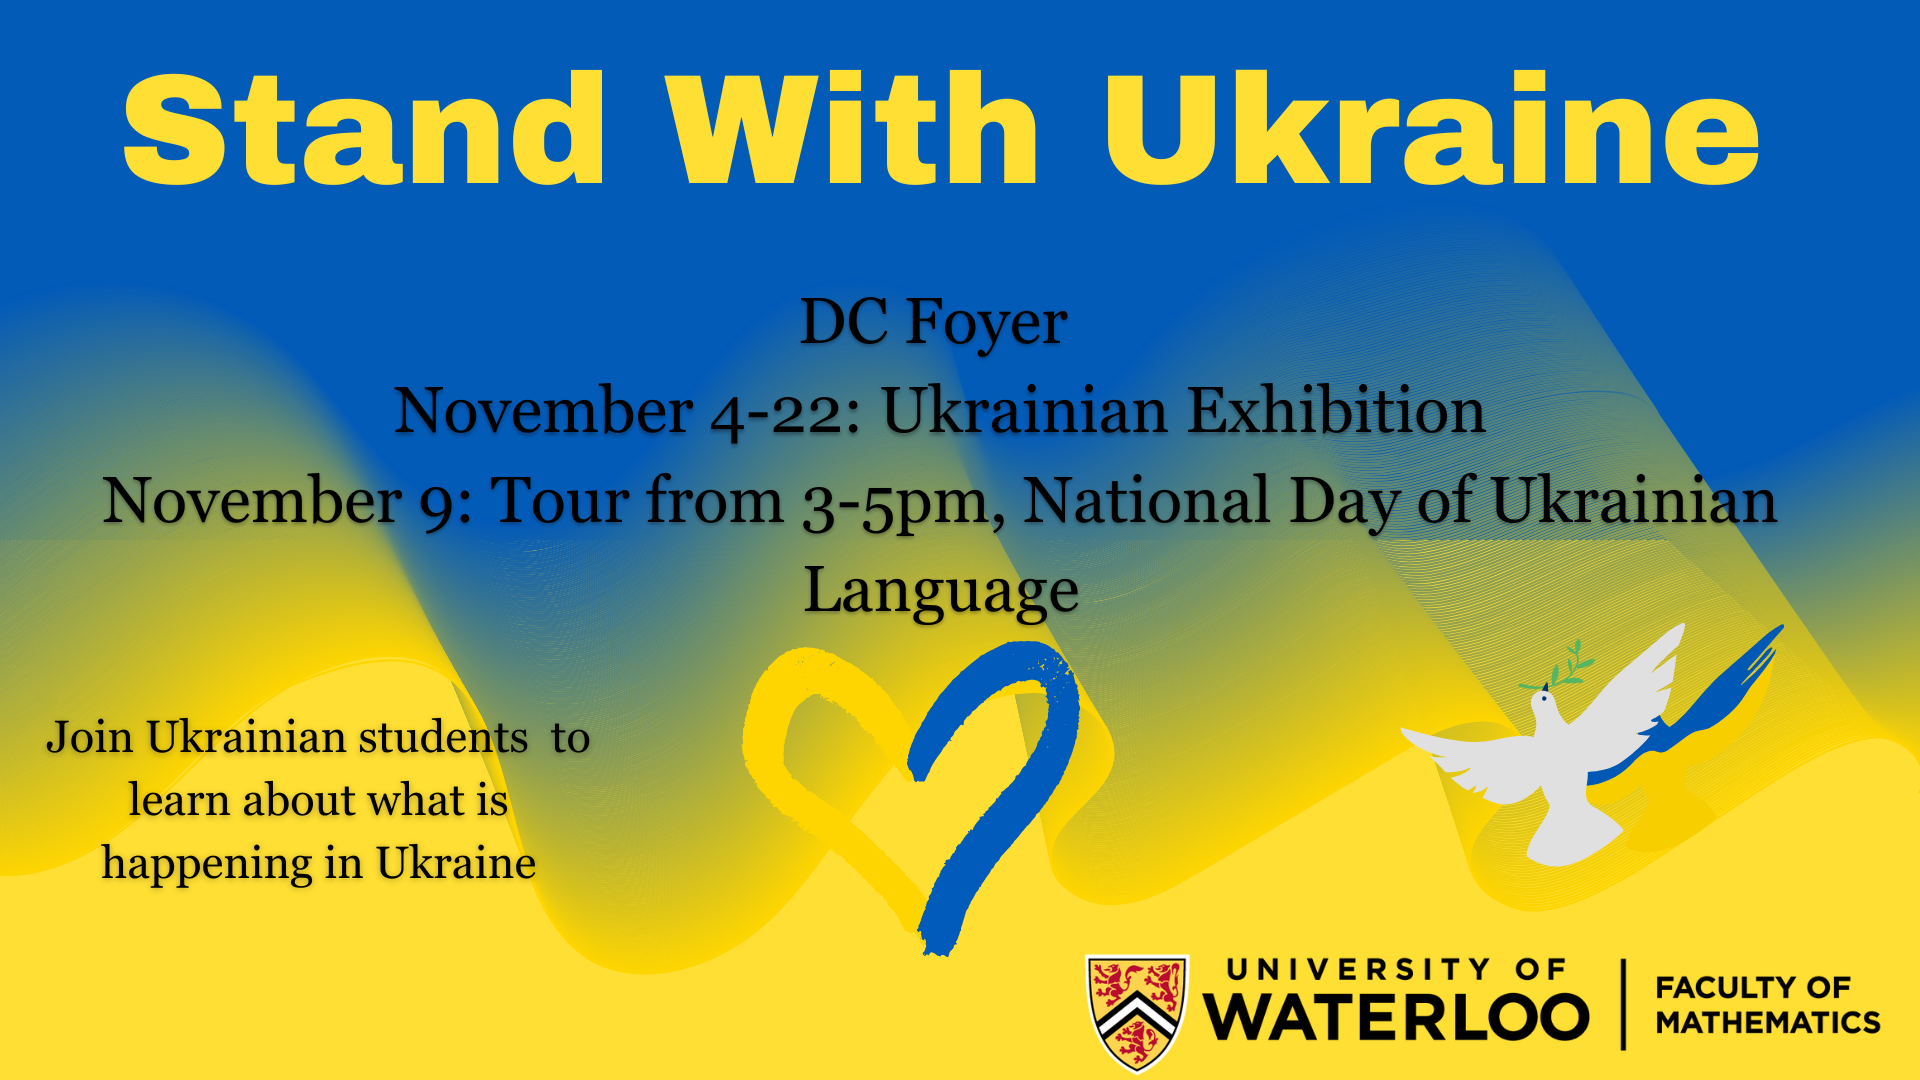 Ukraine exhibit poster with details of event